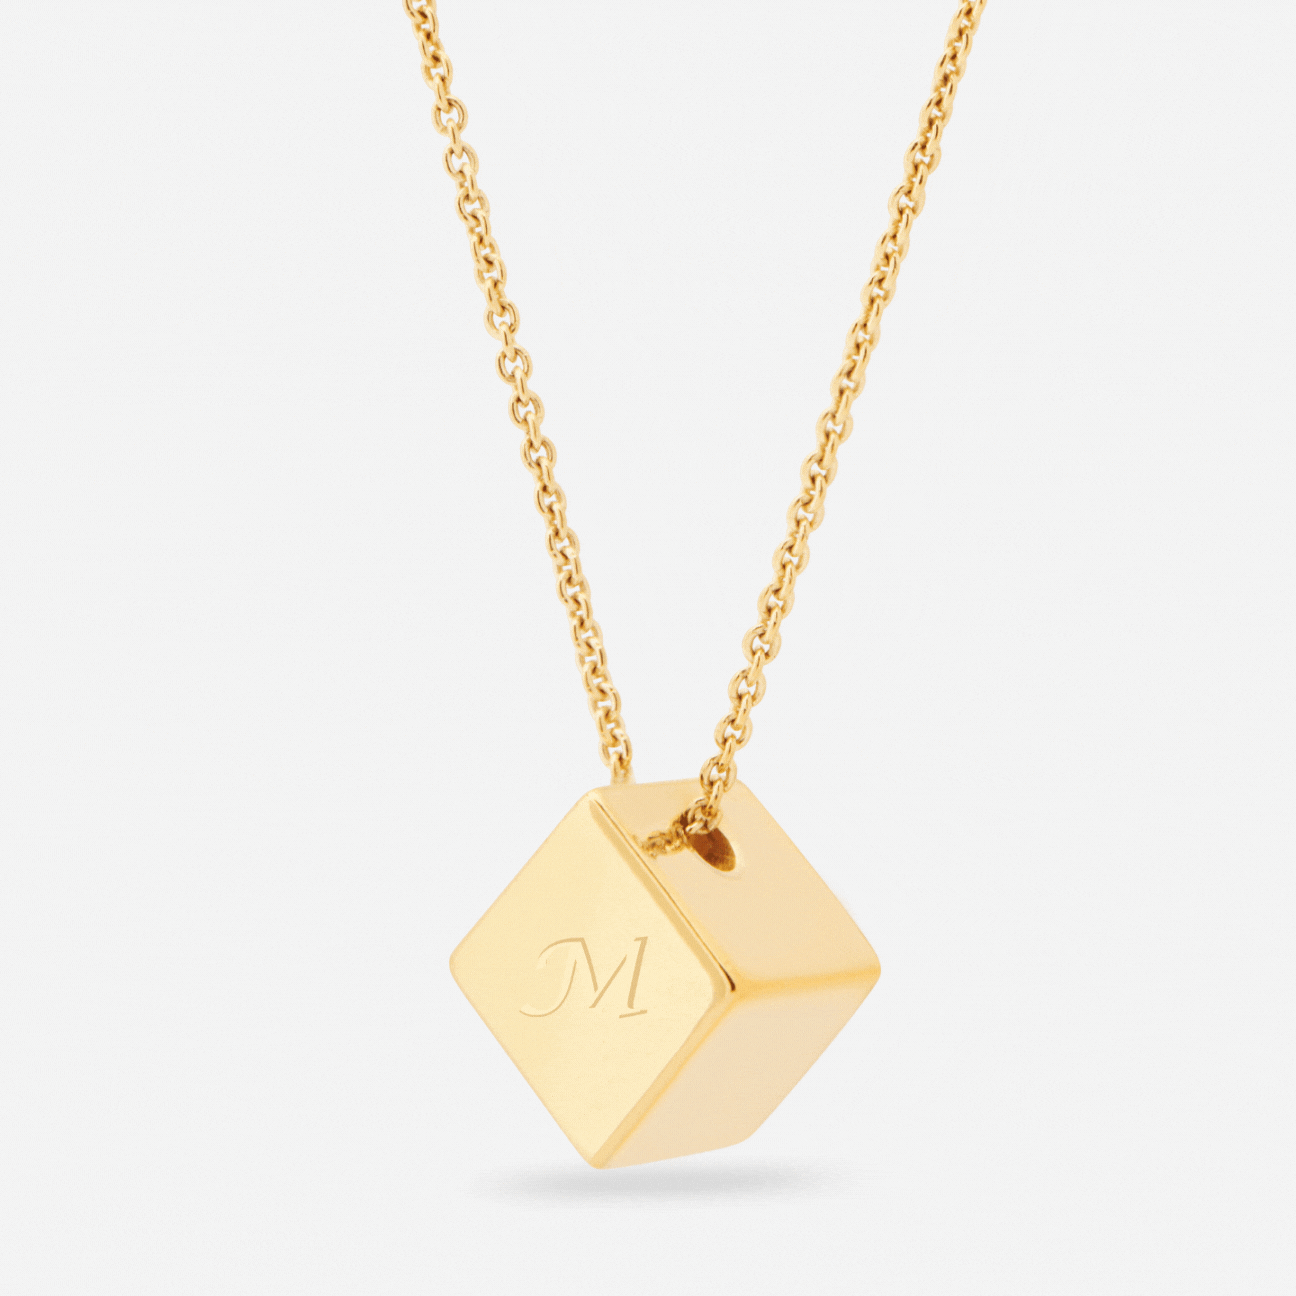 Zircon Cube Pendant Necklace